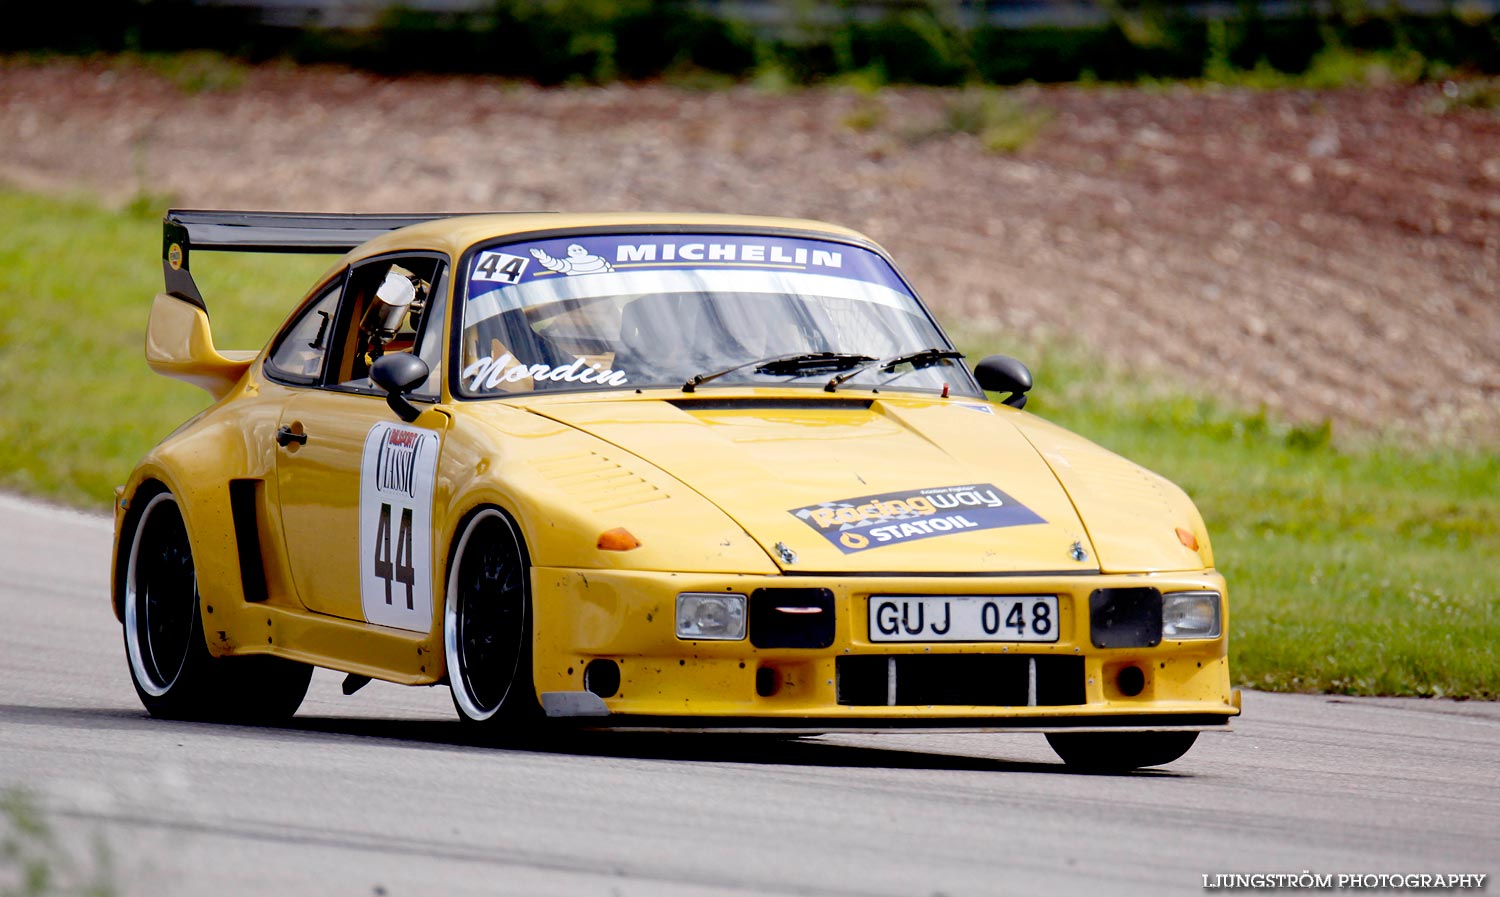 SSK Raceweek,mix,Kinnekulle Ring,Götene,Sverige,Motorsport,,2009,107664